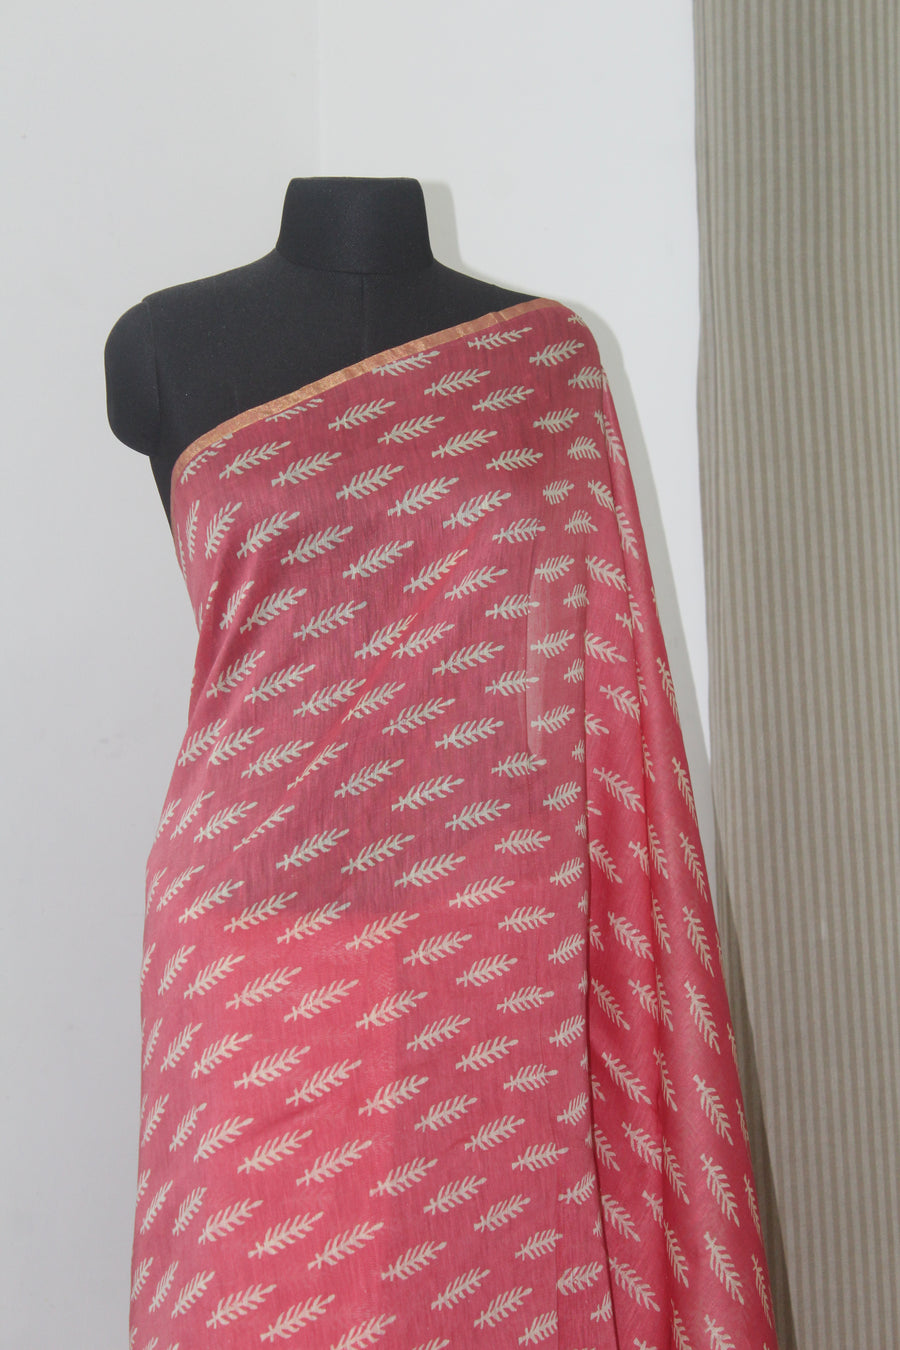 Handloom printed pure linen silk saree